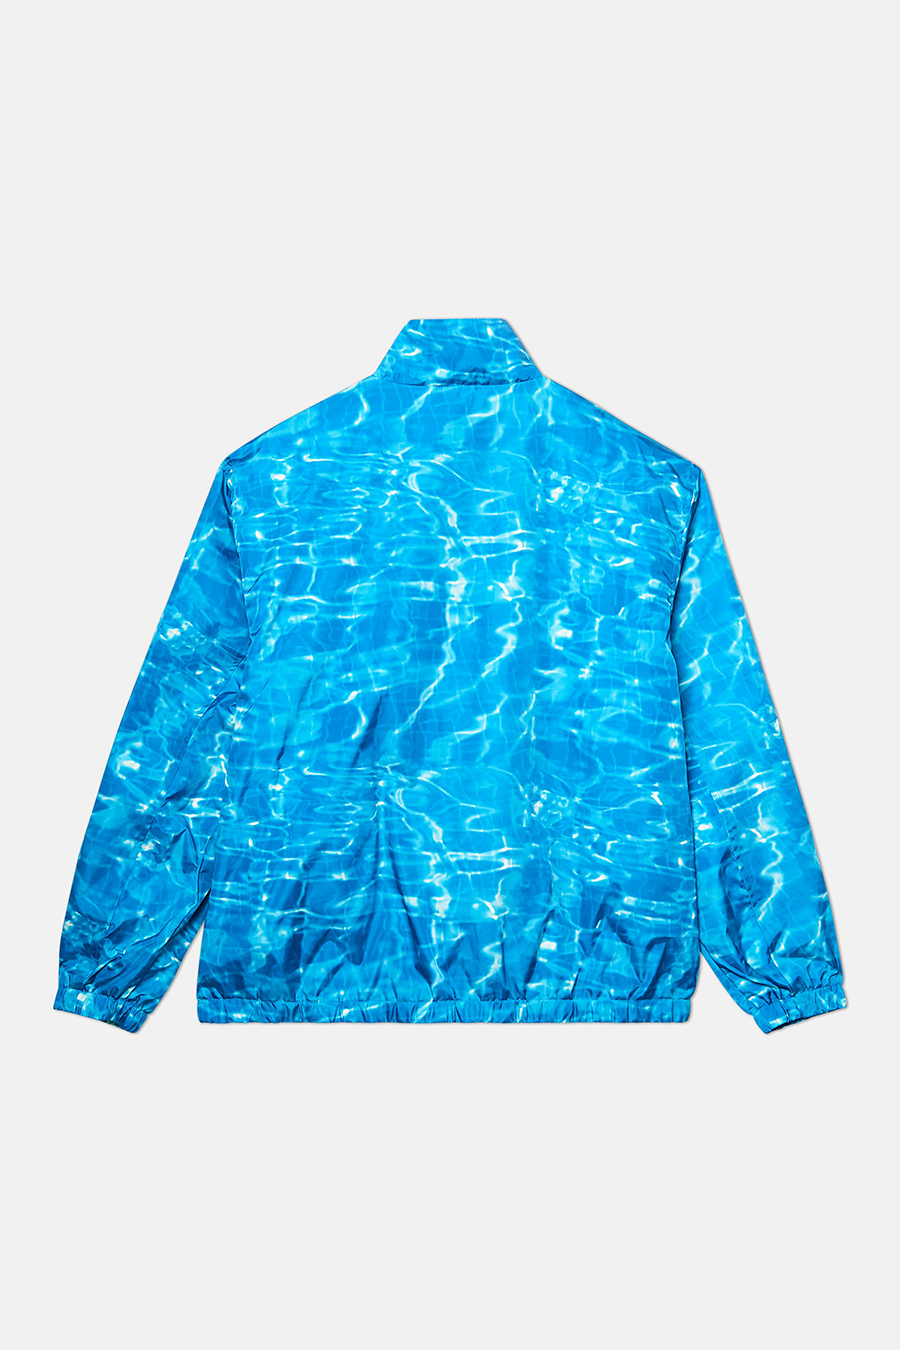 Pool Track Jacket | Blue - Main Image Number 2 of 2